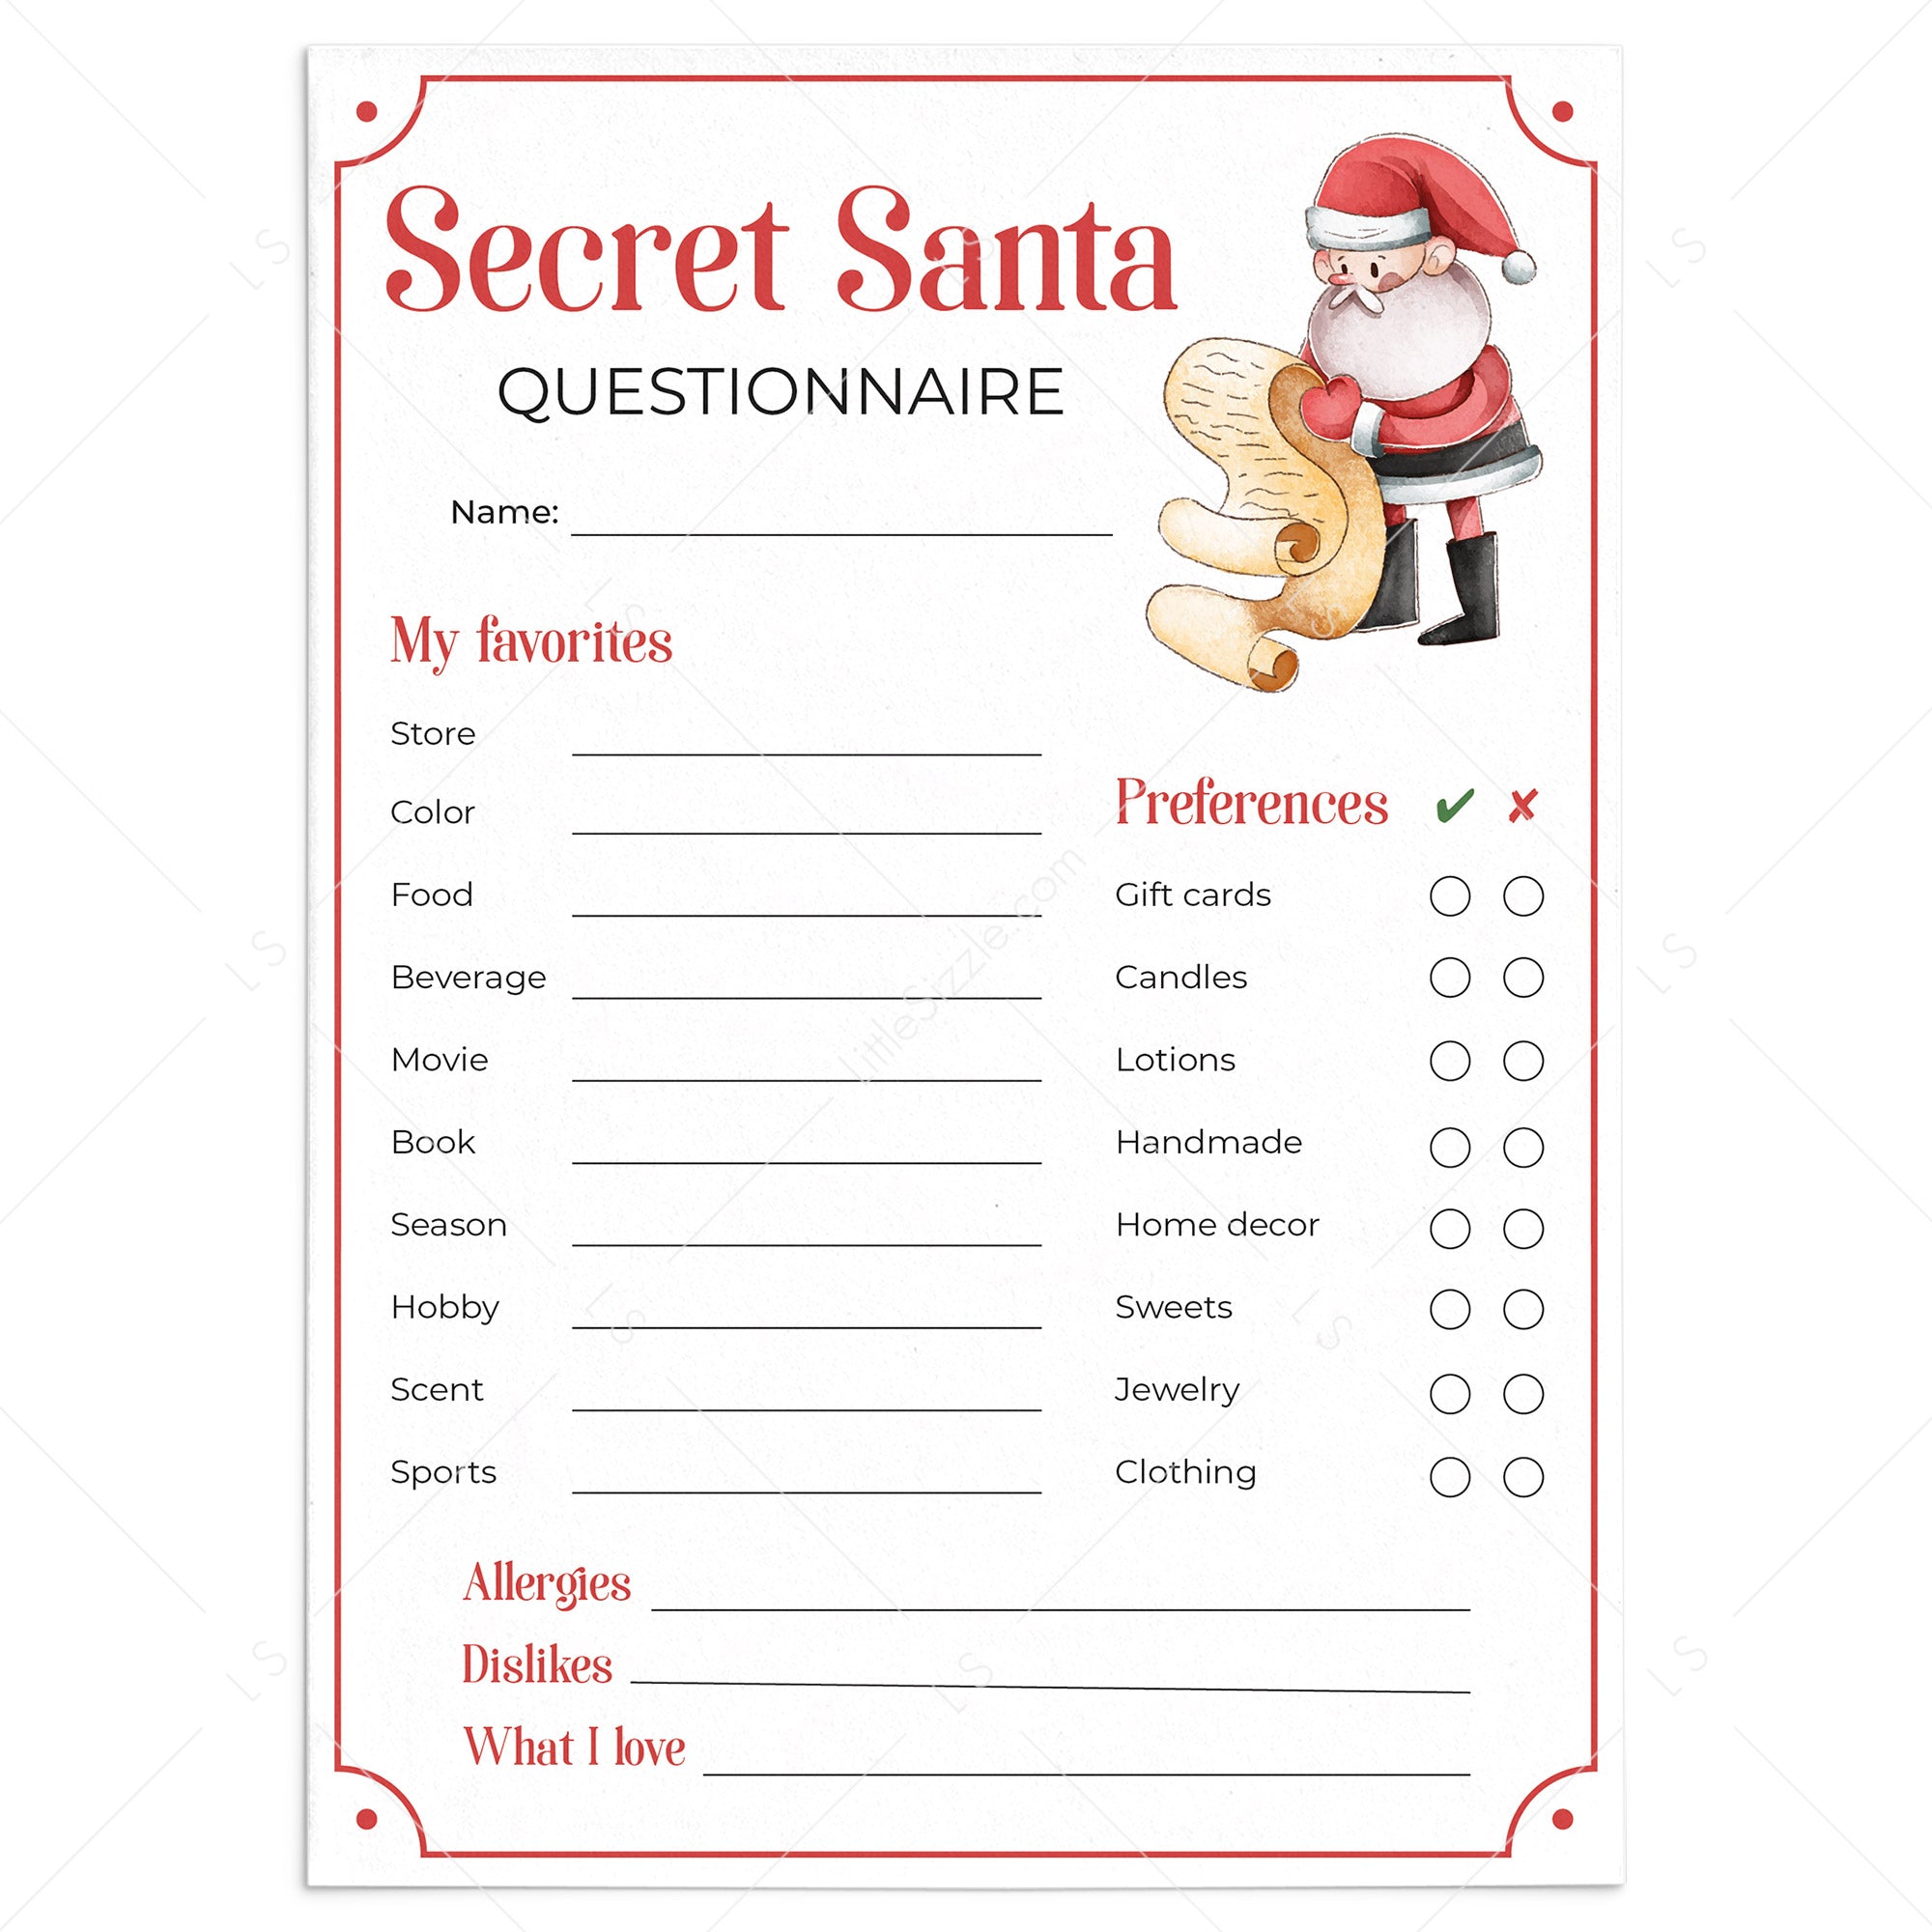 secret-santa-questionnaire-for-gift-exchange-printable-littlesizzle